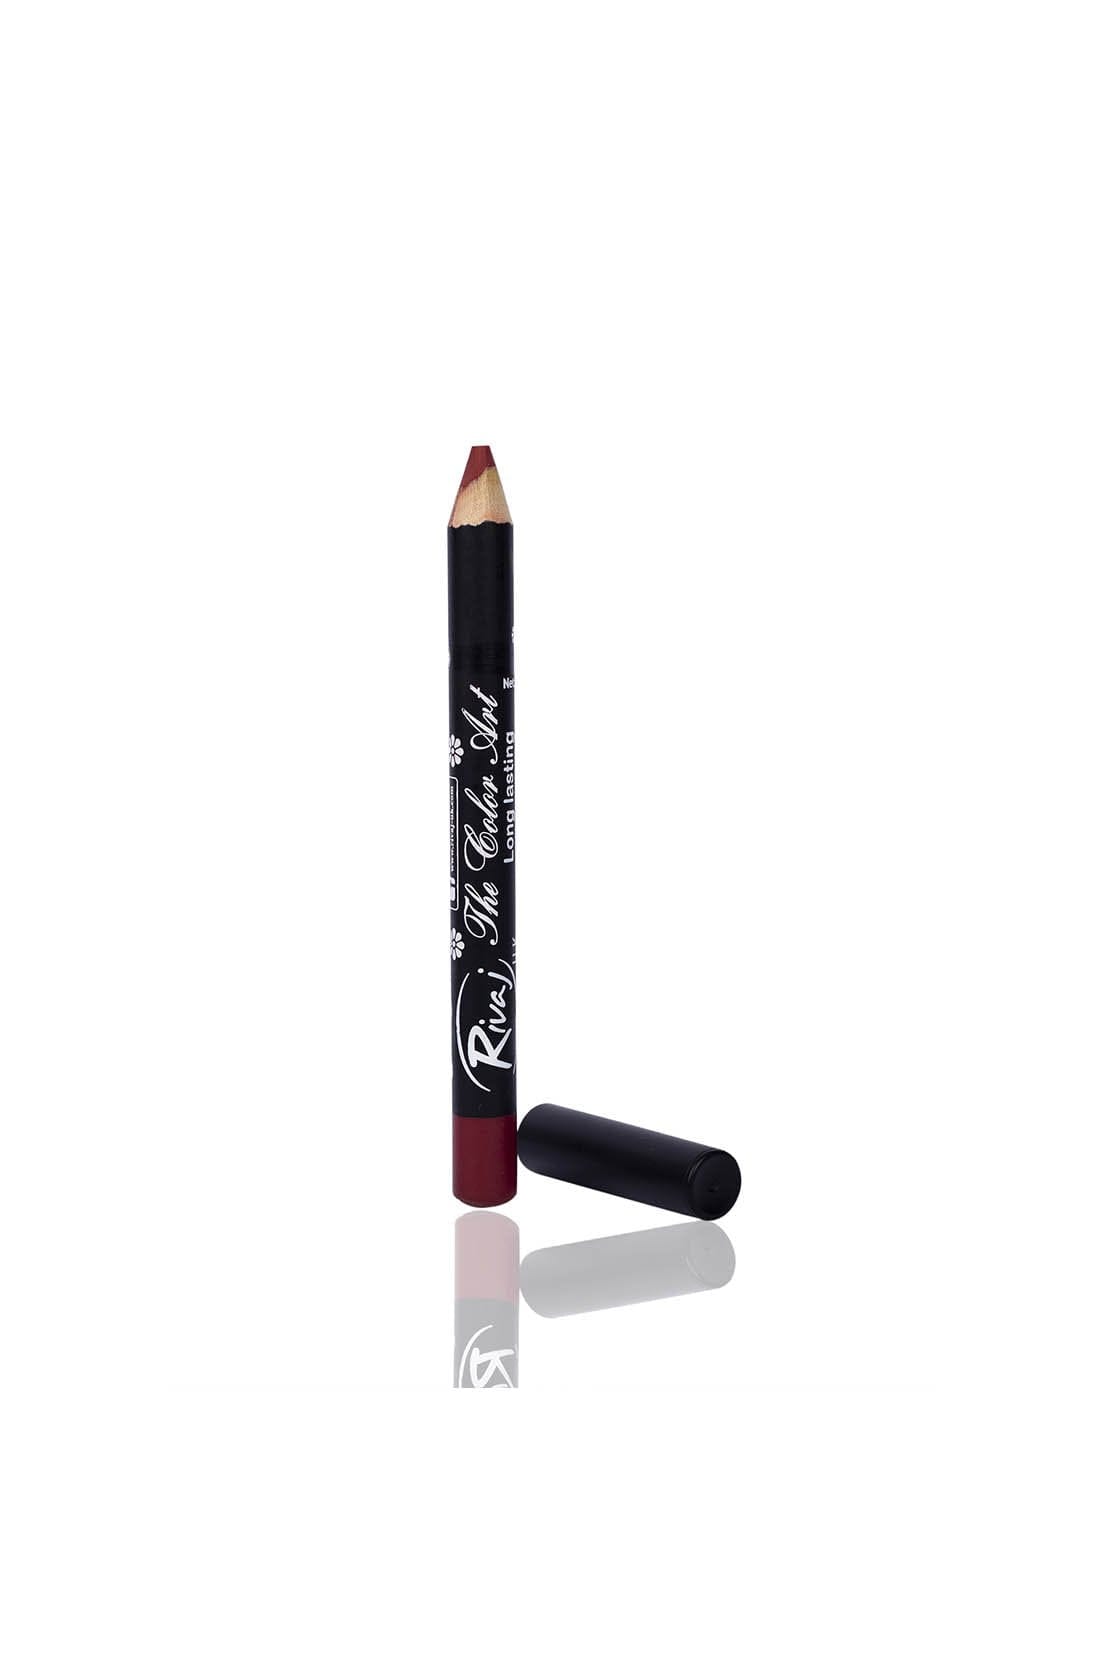 Rivaj Cosmetics UK Lip & Eye Pencil Shade #043 reddle